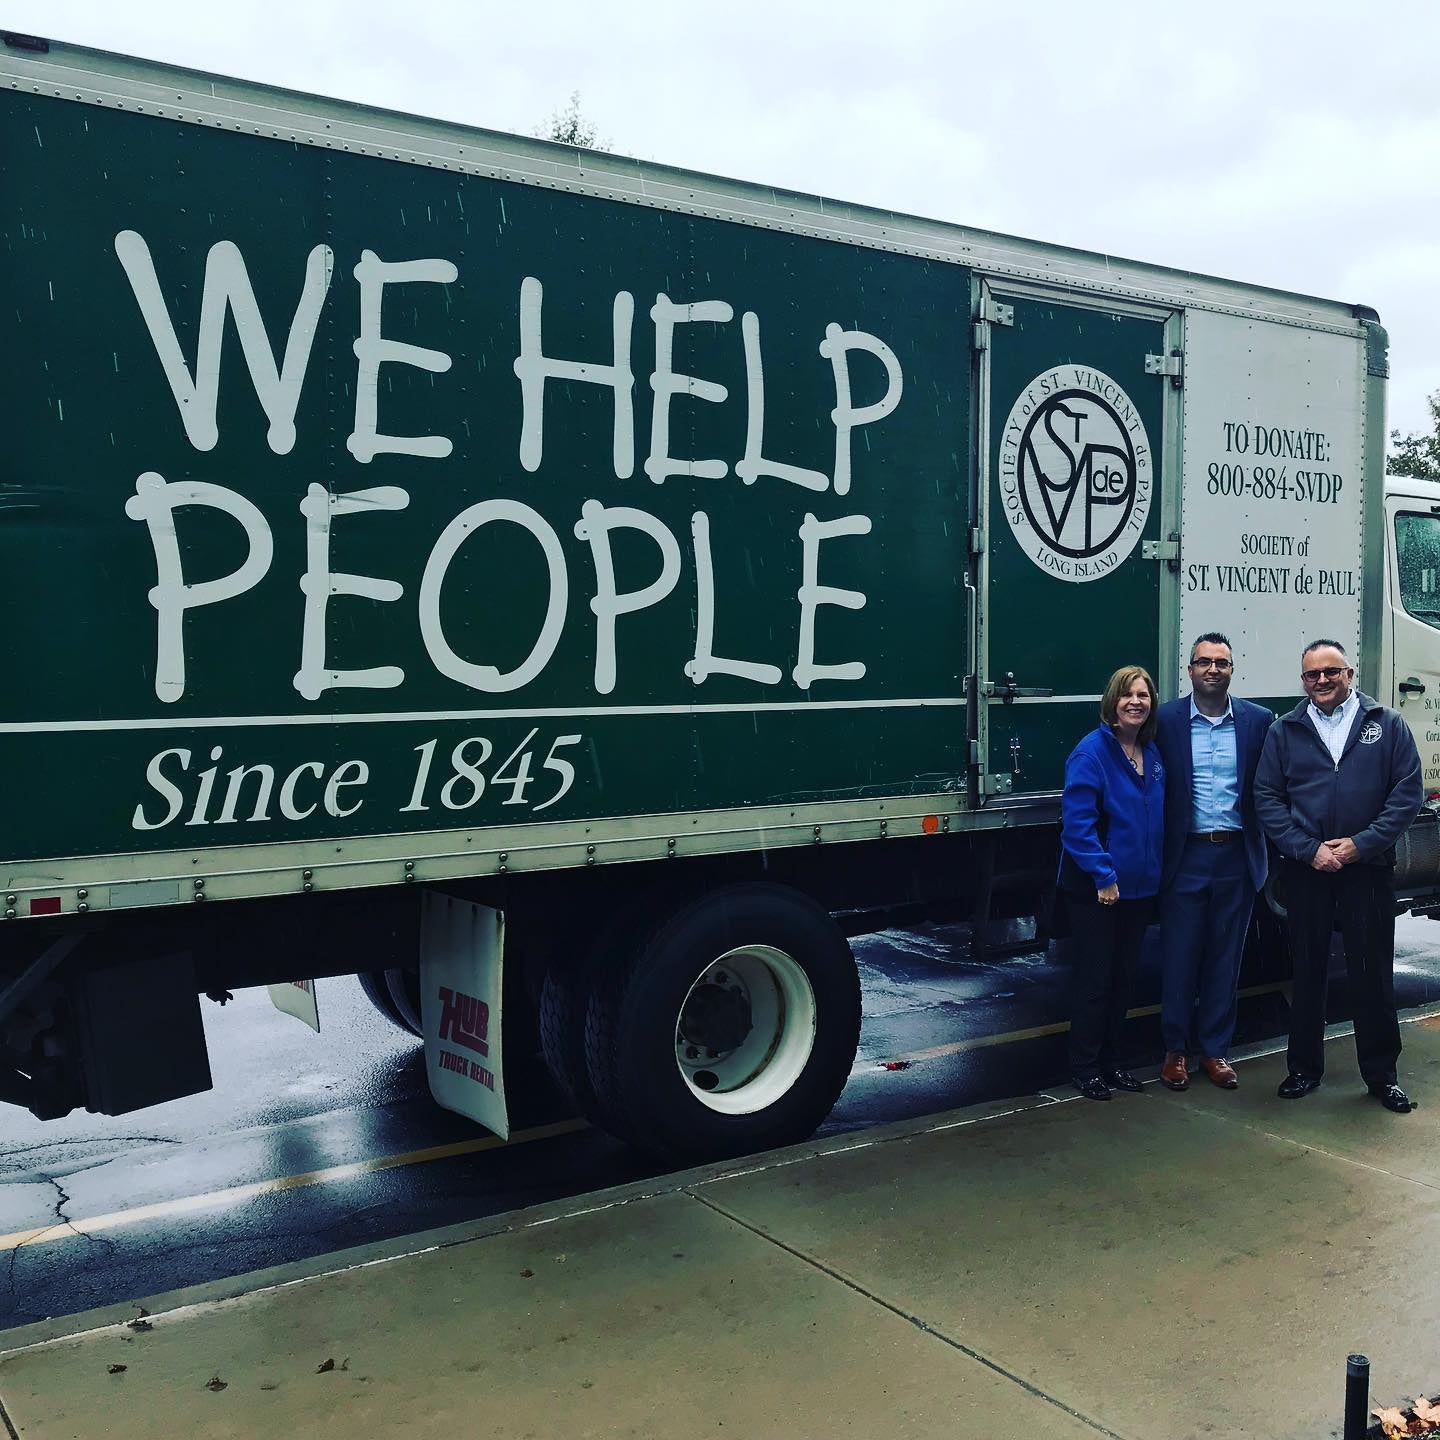 We Help People written on St. Vincent DePaul truck